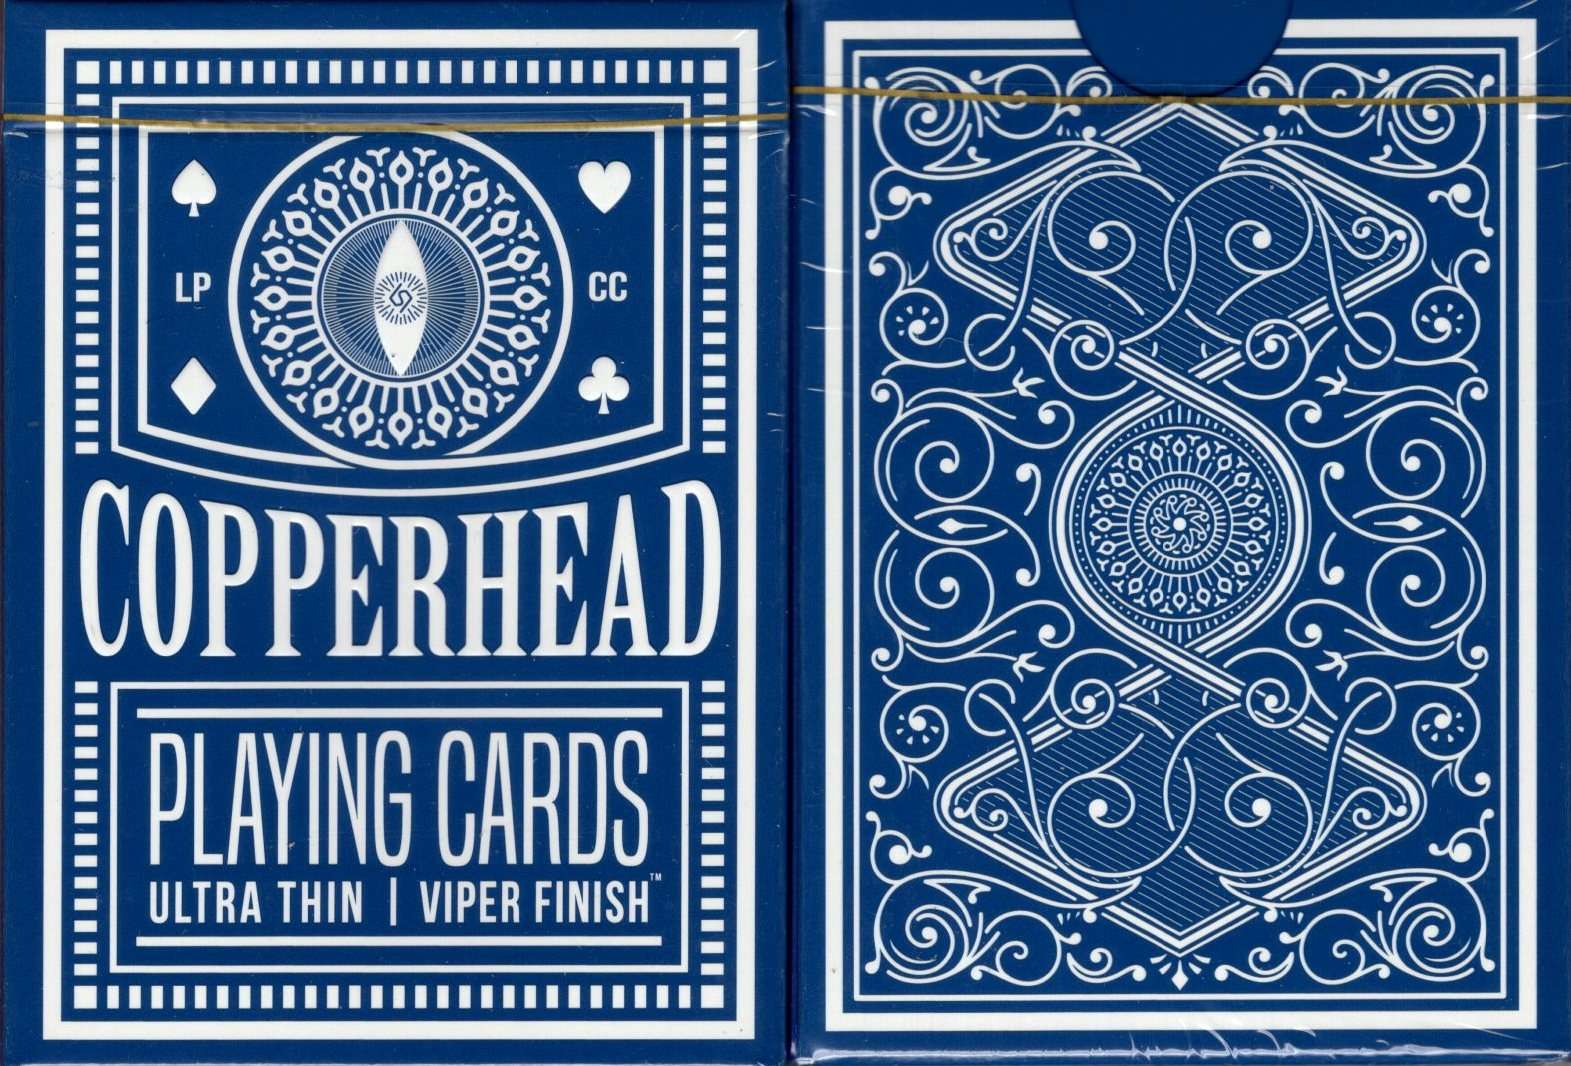 PlayingCardDecks.com-Copperhead v1 Blue Playing Cards LPCC